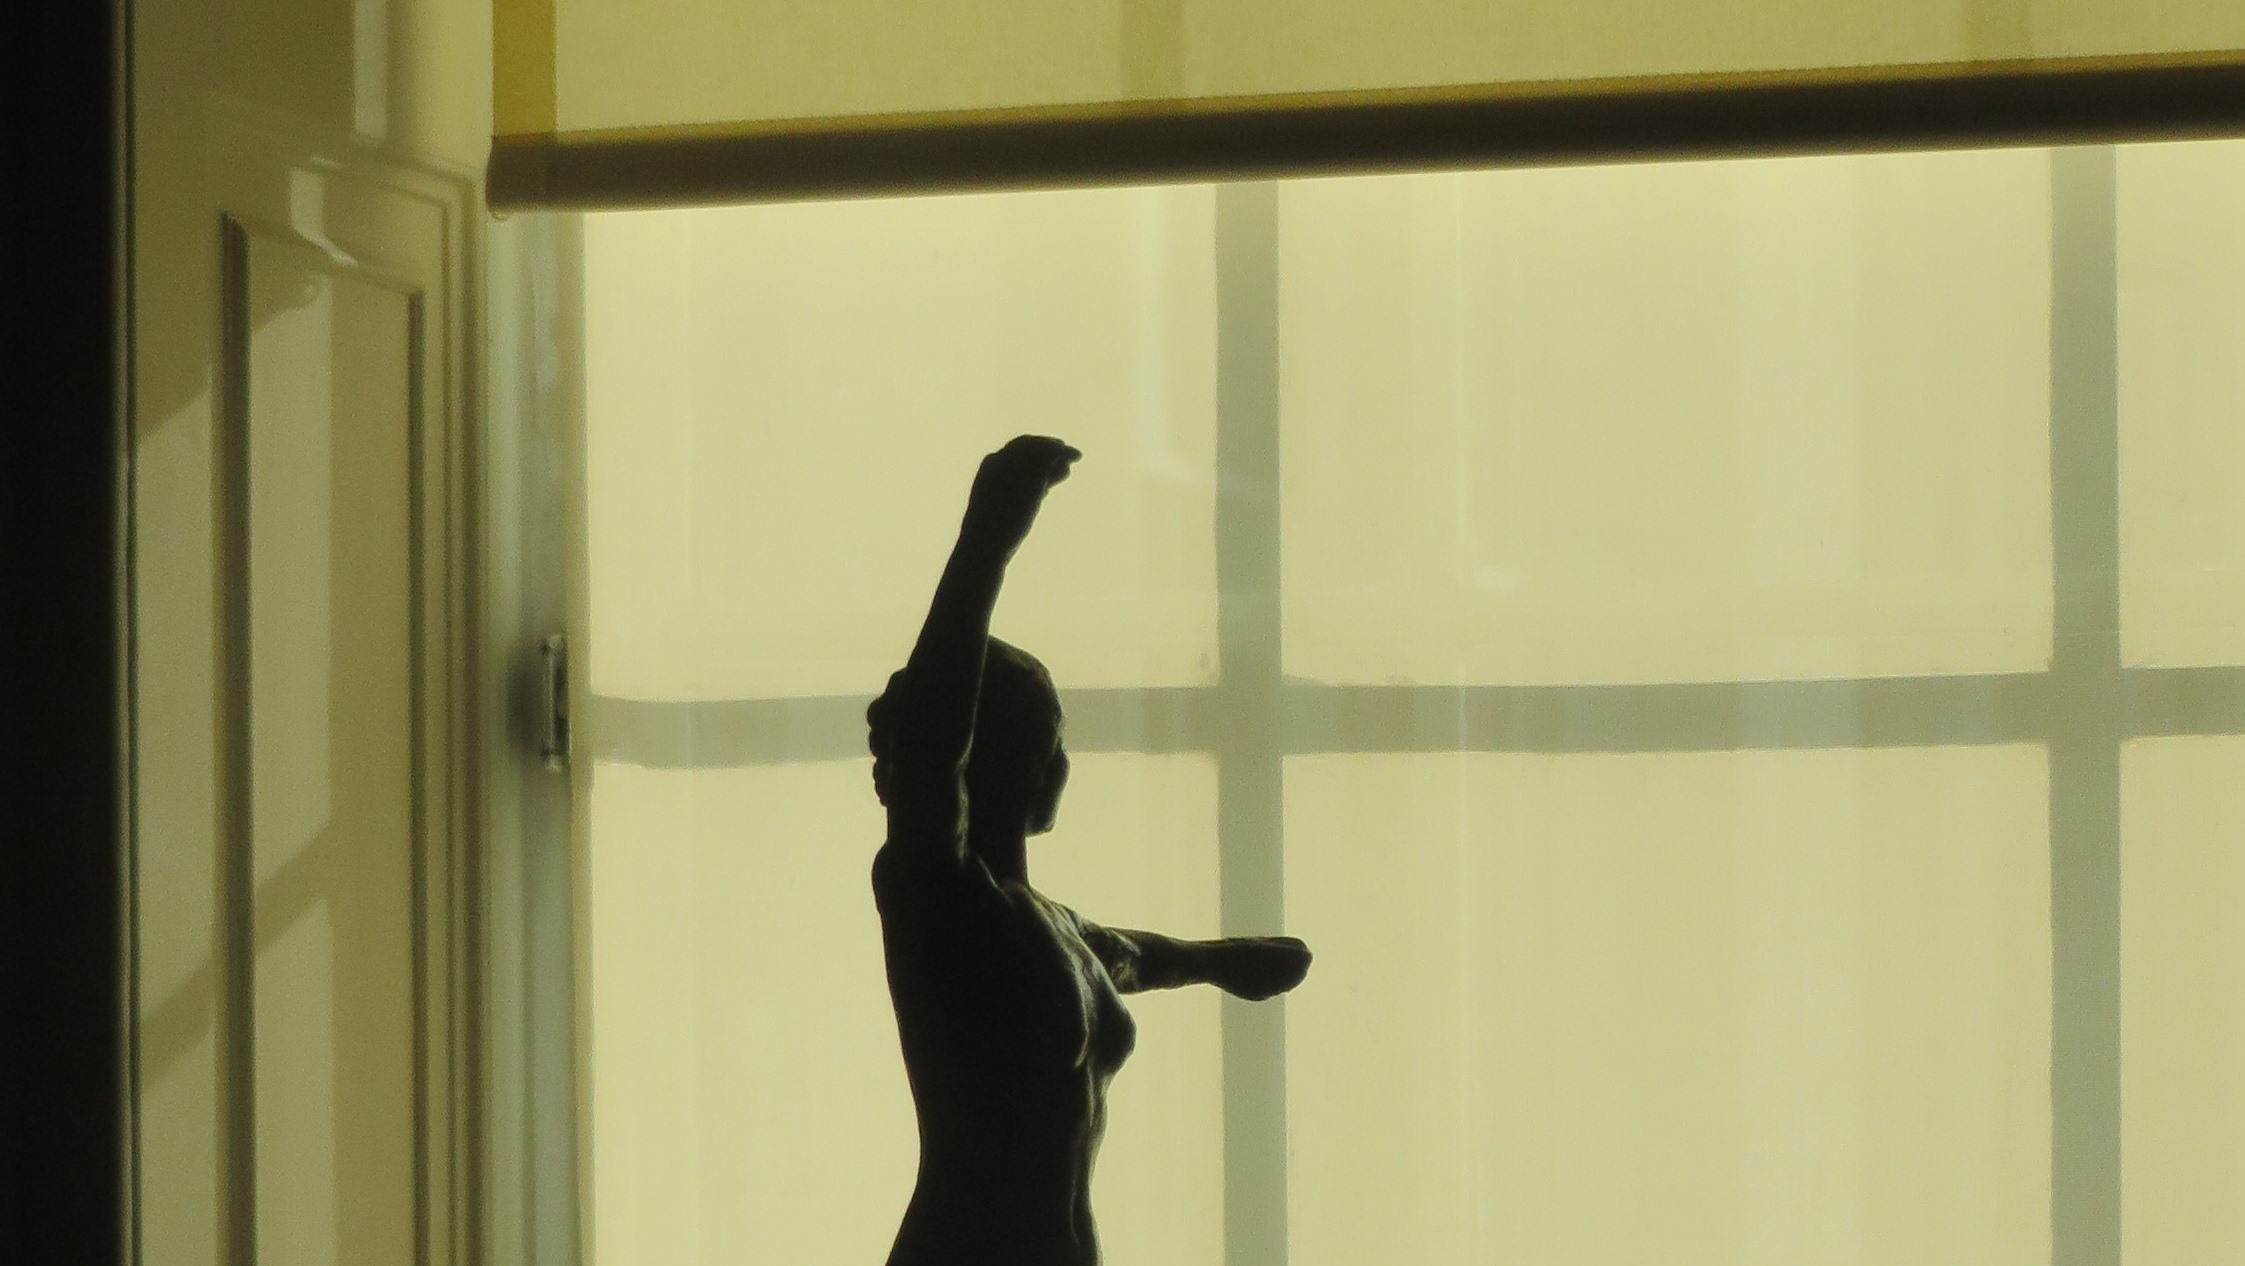 Degas dancer, the Courtauld Gallery (detail)